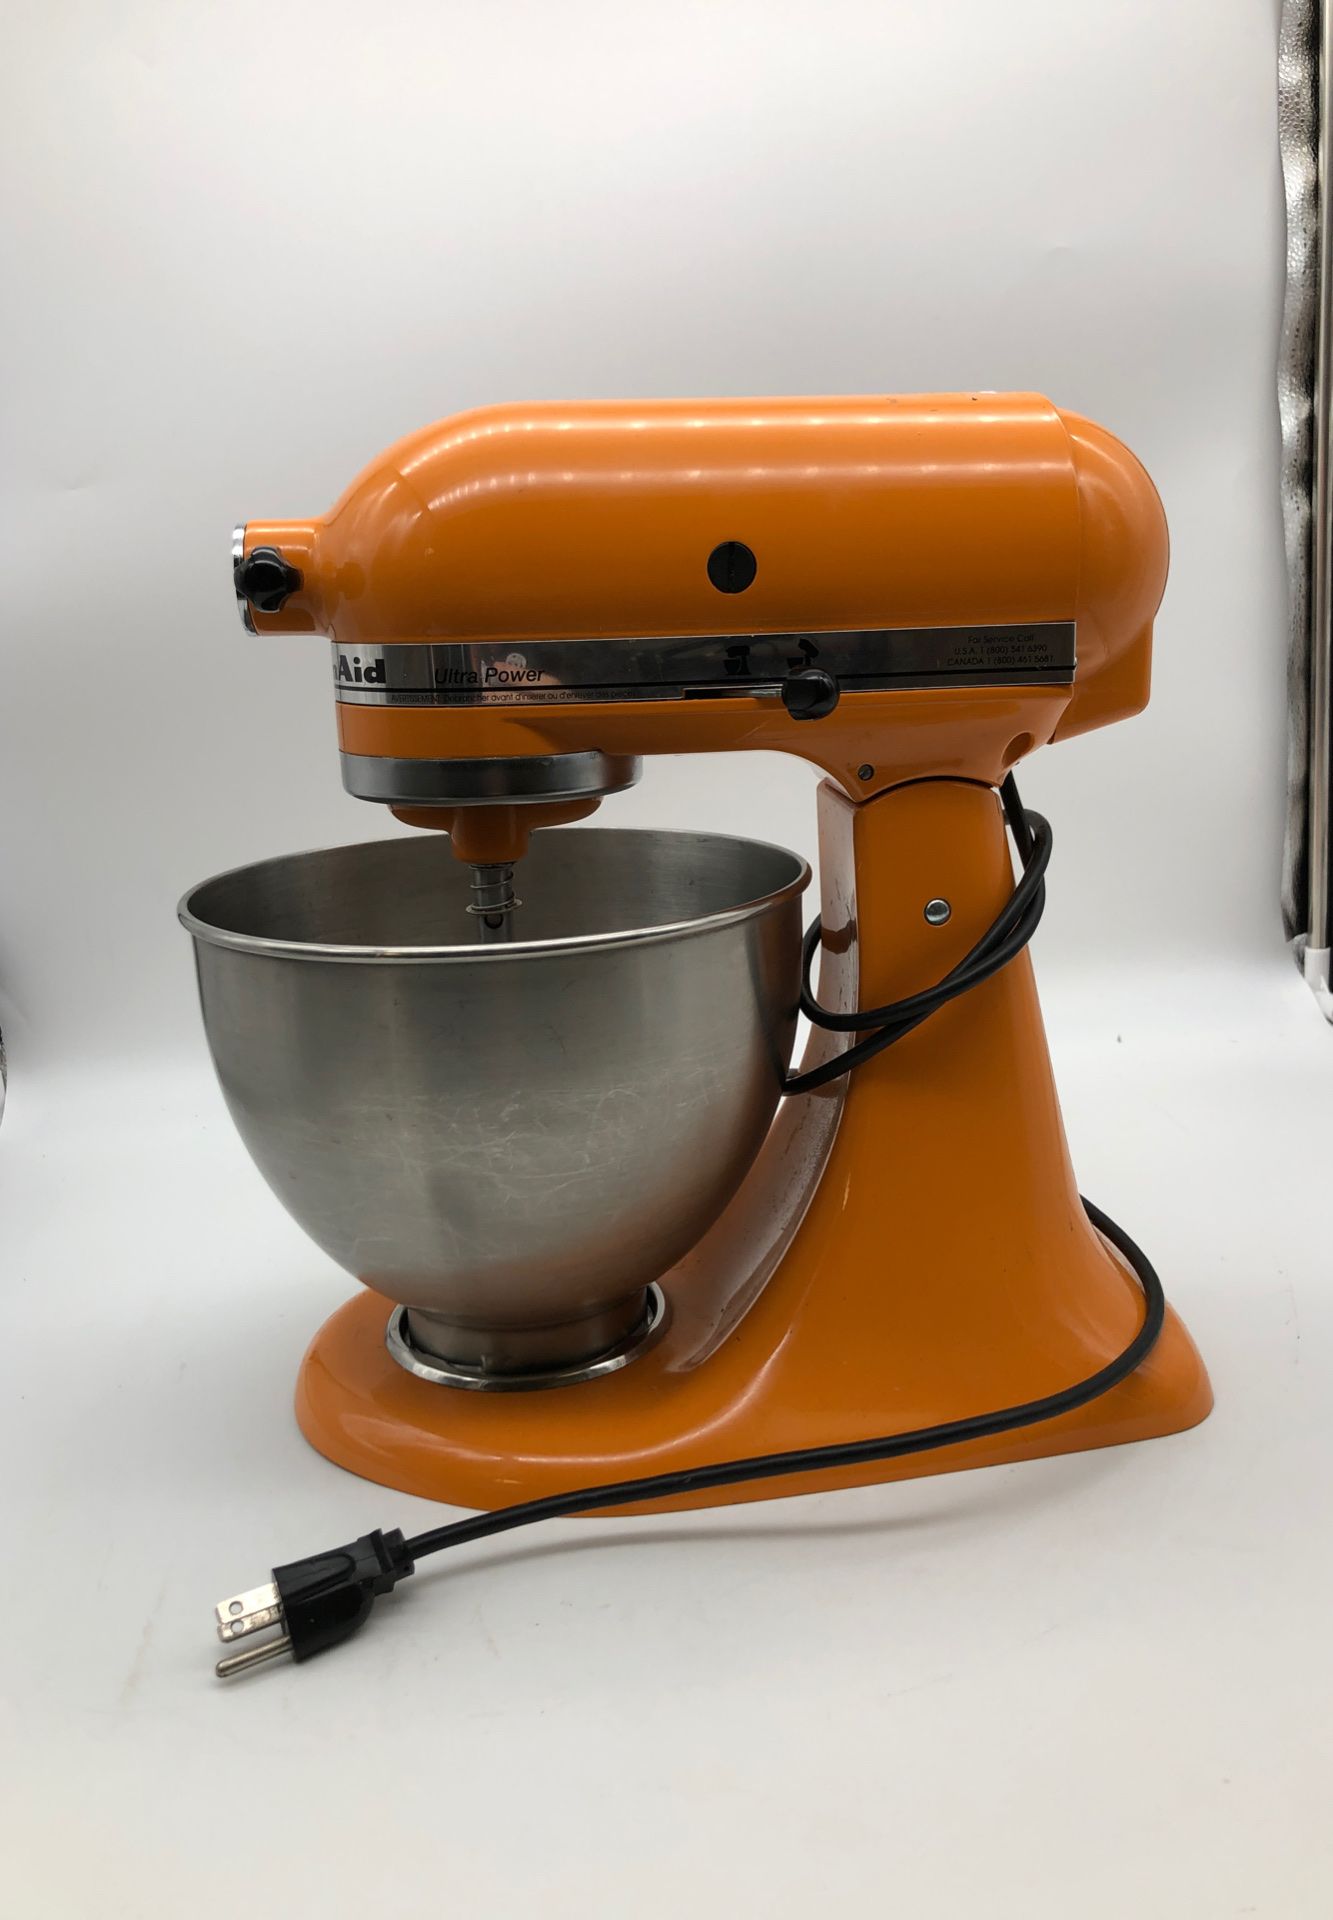 Kitchen Aid Mixer - Orange 5 Quart